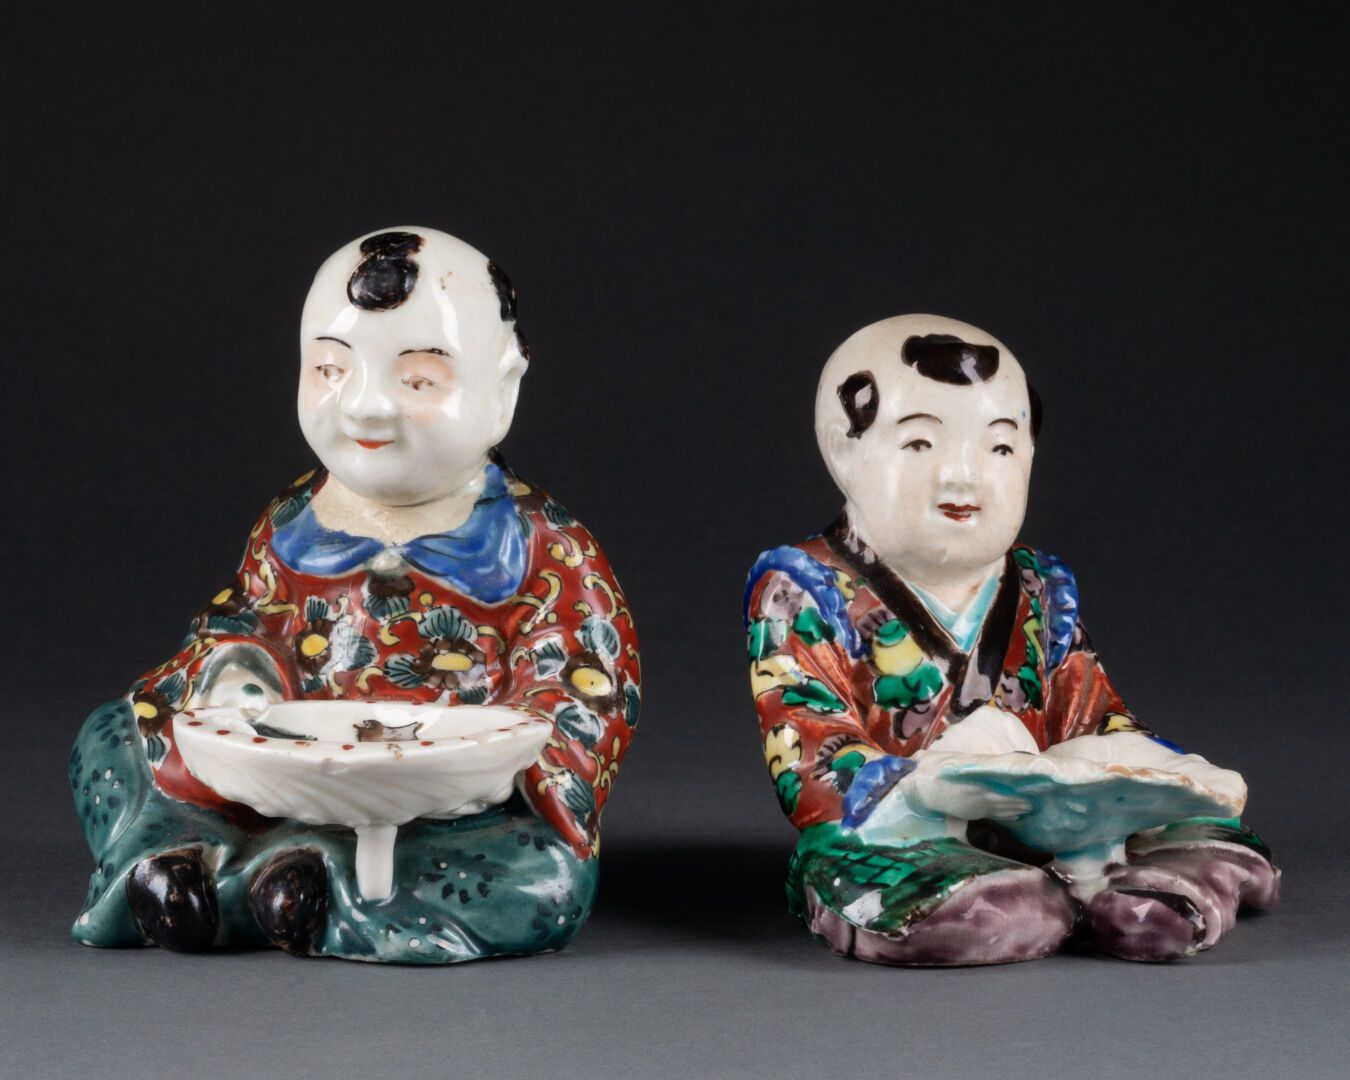 JAPON - Vers 1900 两个孩子的放松姿势 
瓷器和多色珐琅 
H.12 cm - W. 11 cm